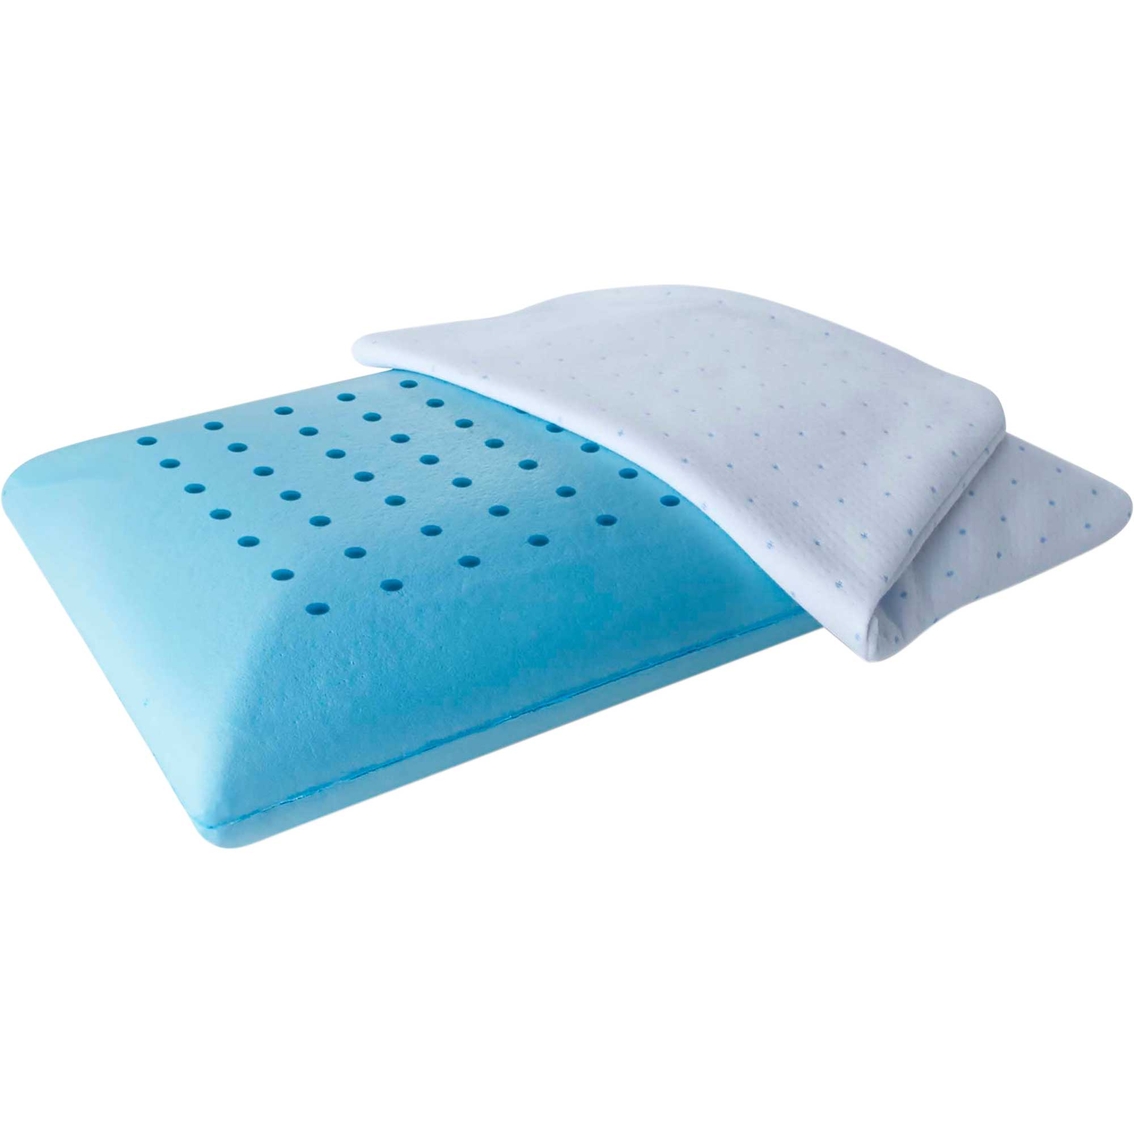 Rio Home Fashions Artic Sleep Memory Foam Standard Pillow - Image 2 of 3